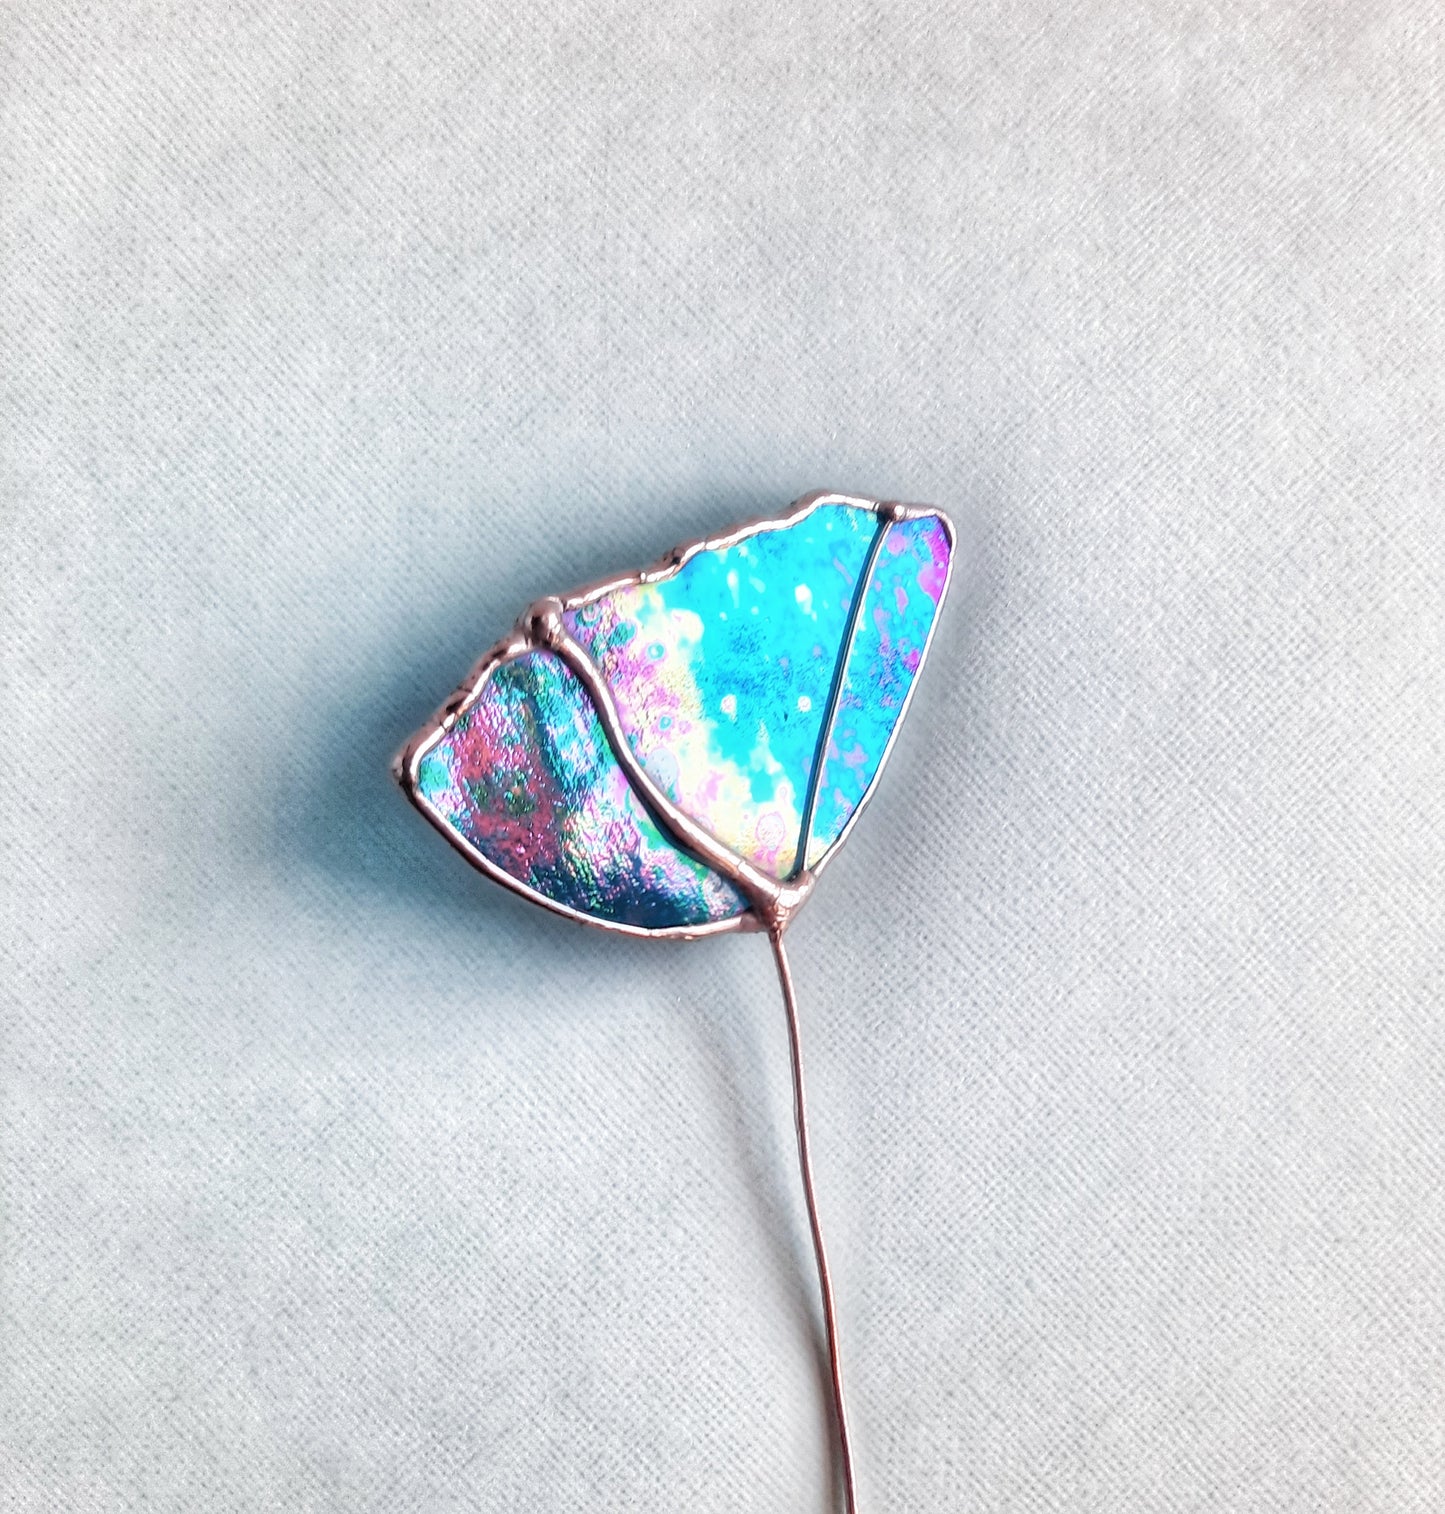 Glass Flower- Himalayan Blue Poppy